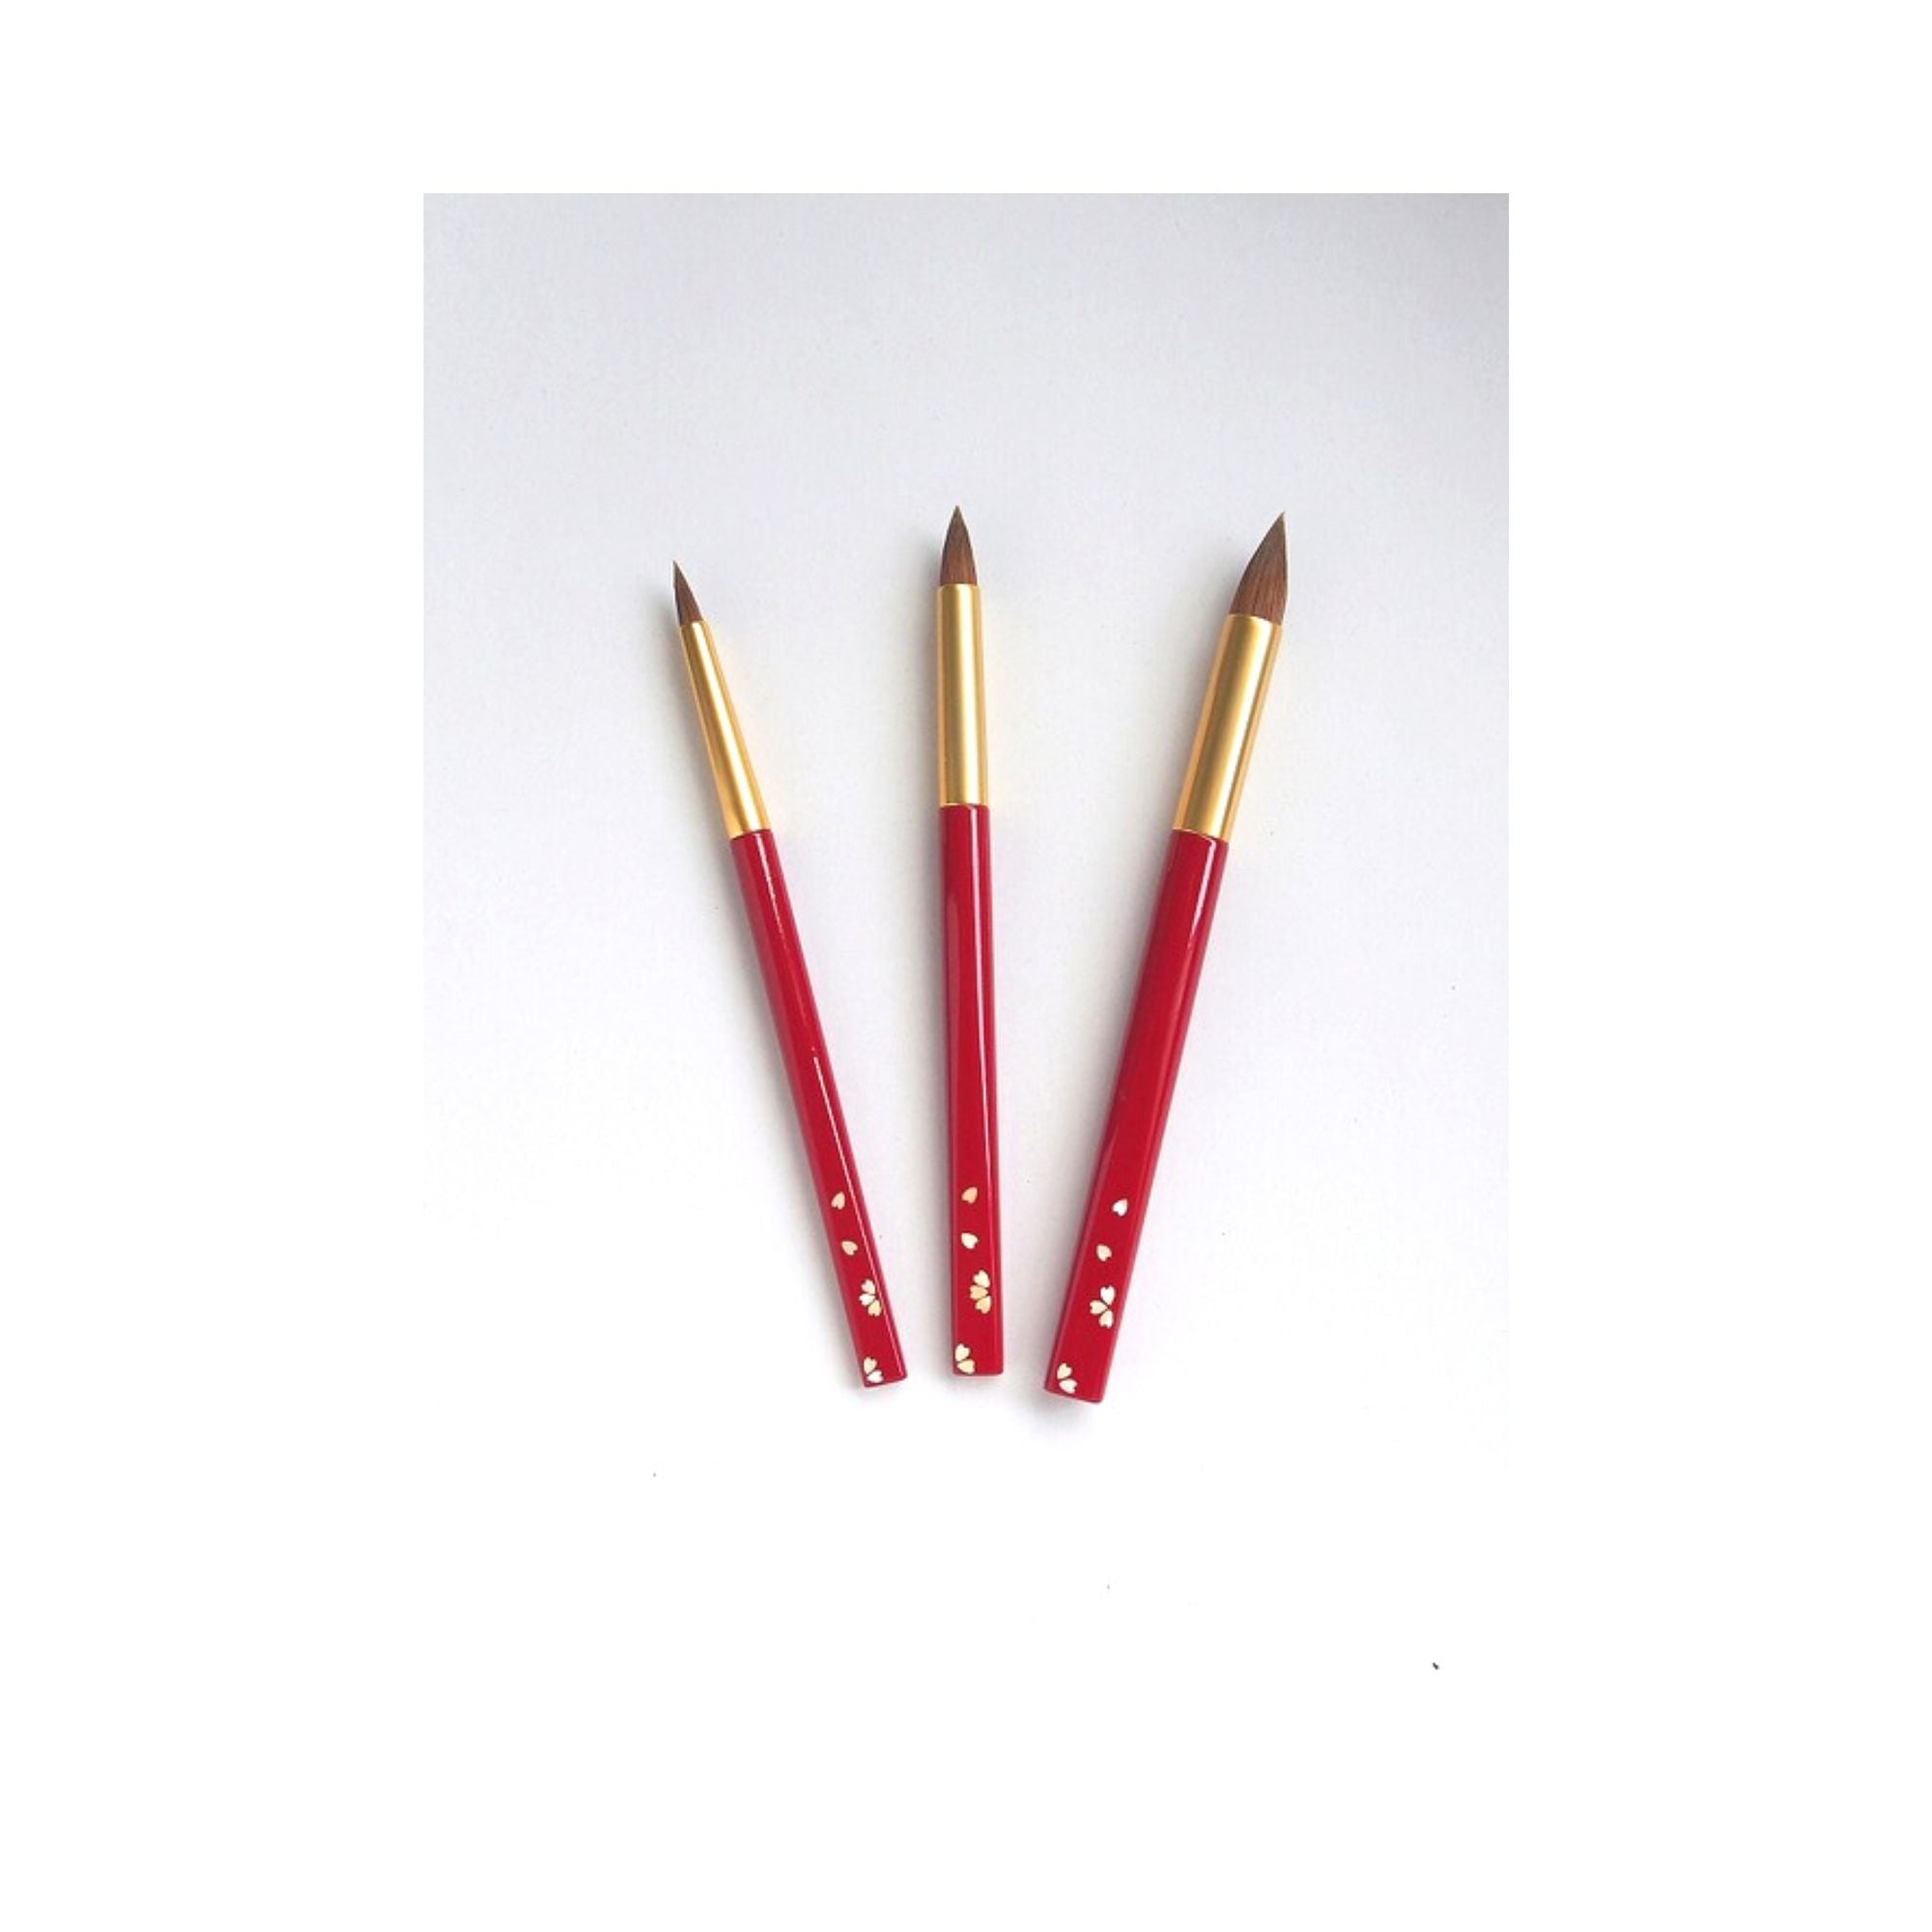 Koyudo Raden Kolinsky Large Eyeshadow Brush, Sakura Petal (Red) - Fude Beauty, Japanese Makeup Brushes